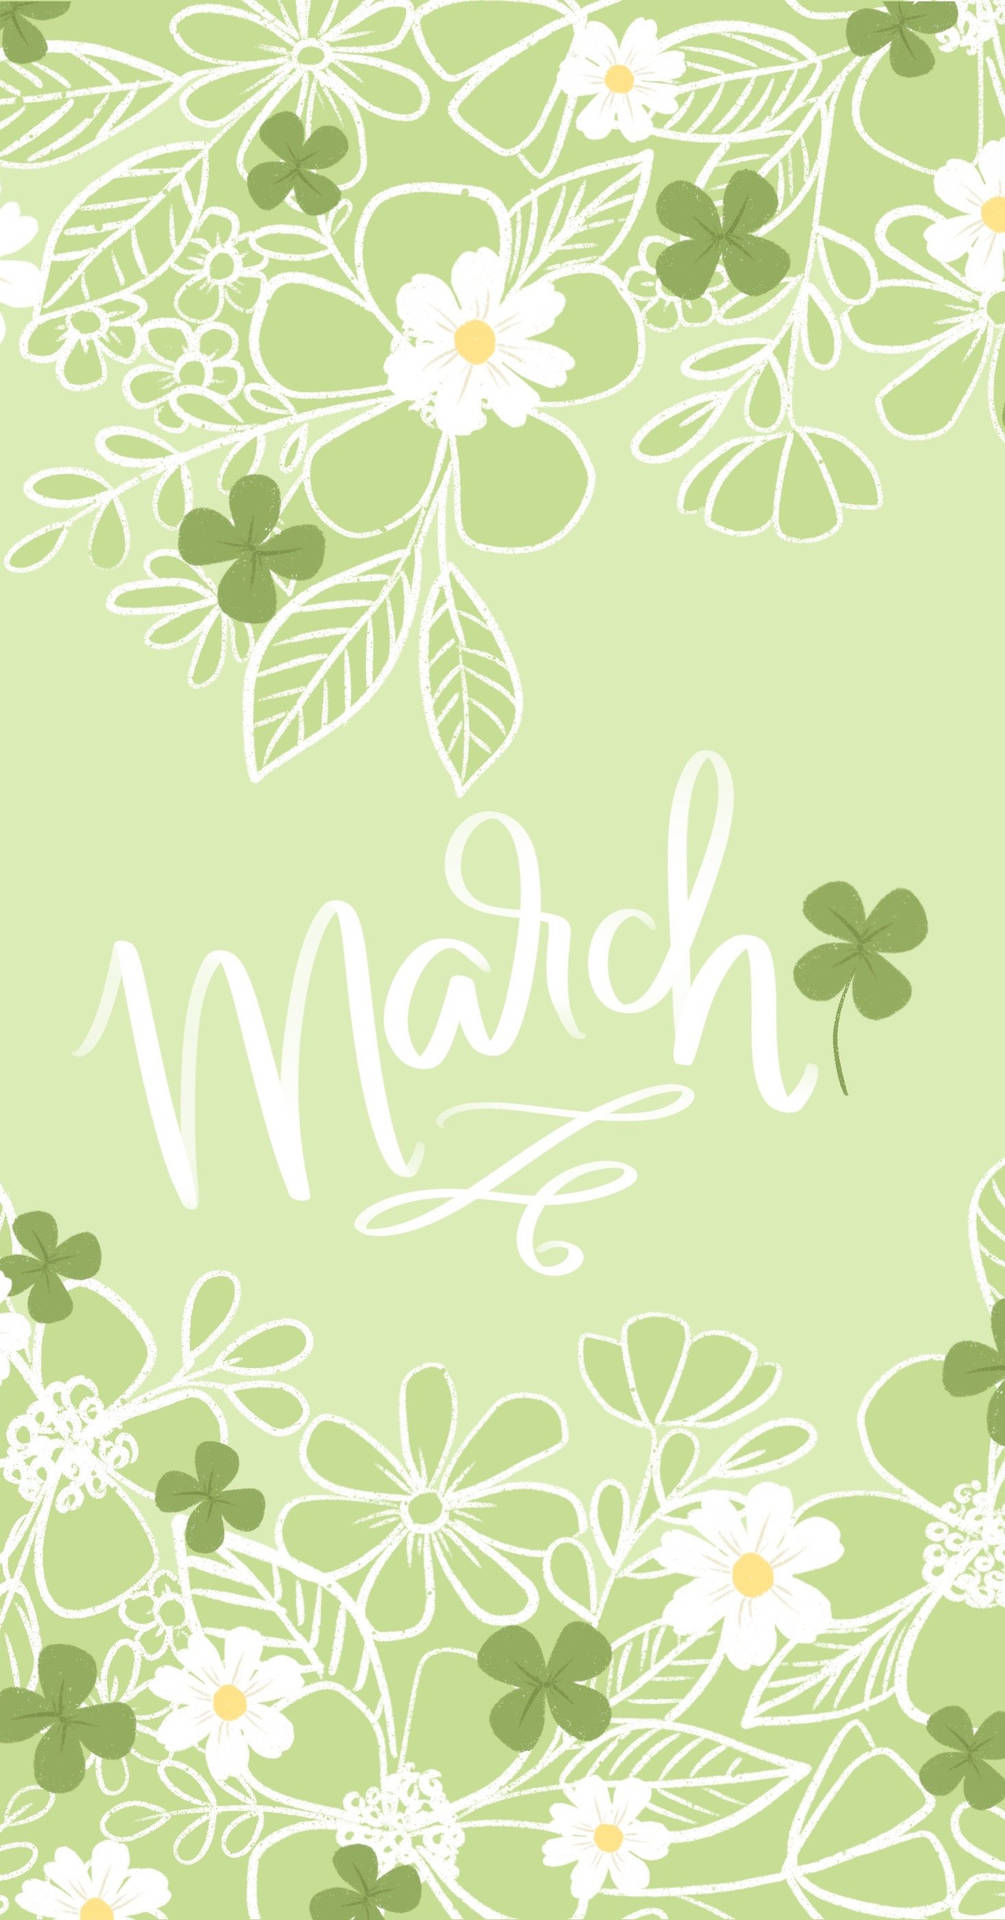 March Digital Illustration Background